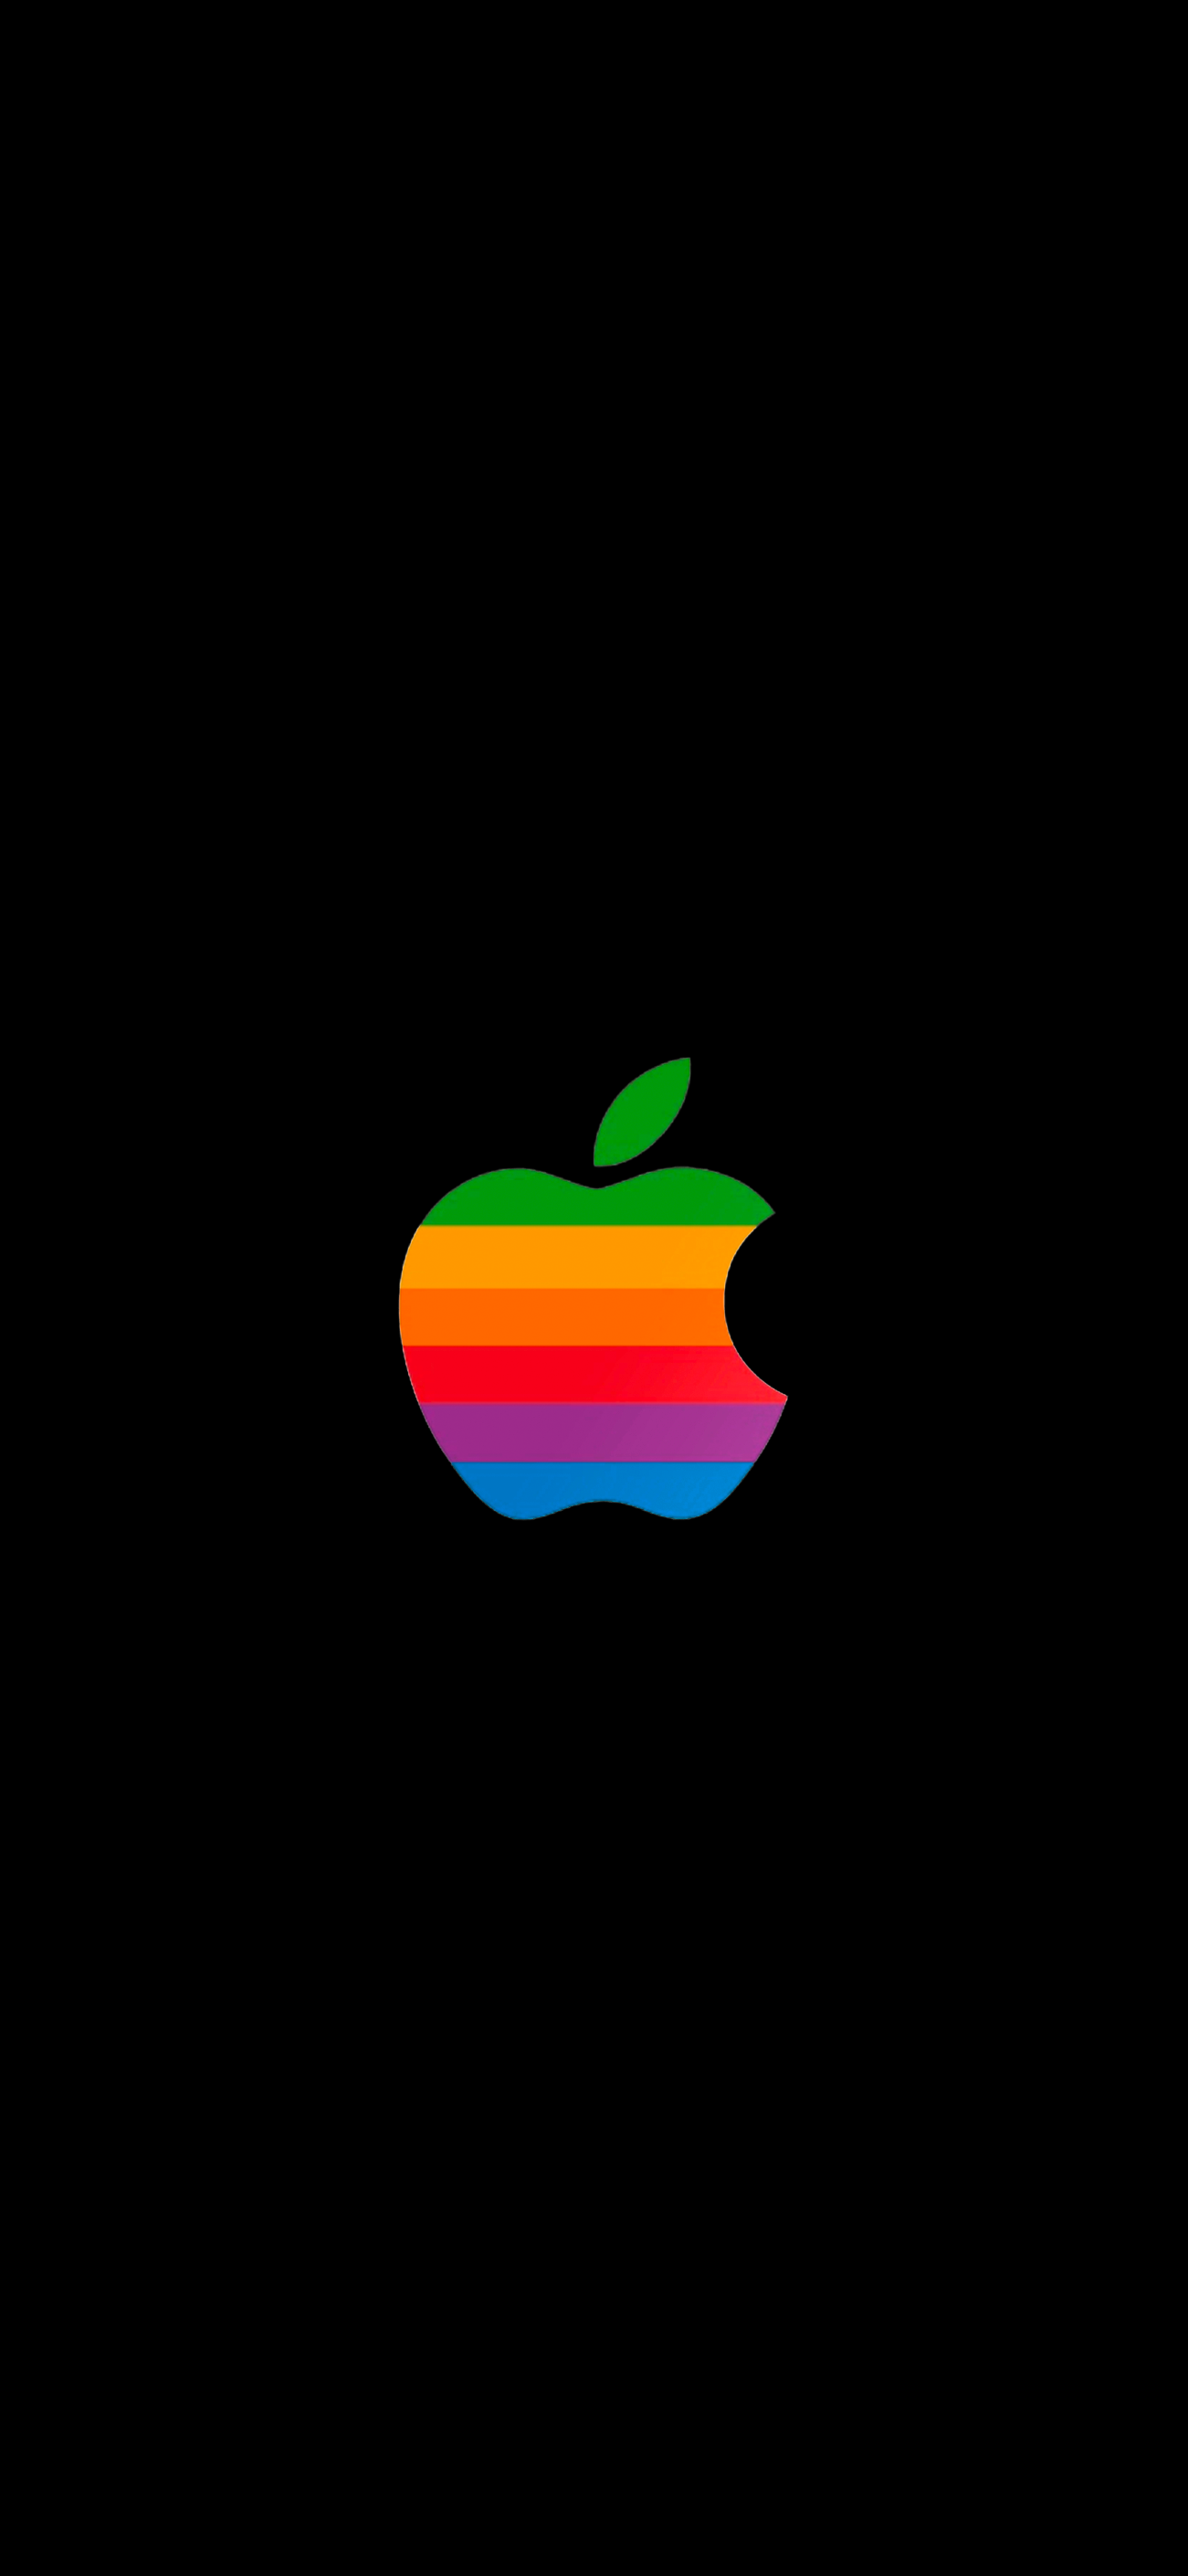 The Rainbow Apple Logo Black Version